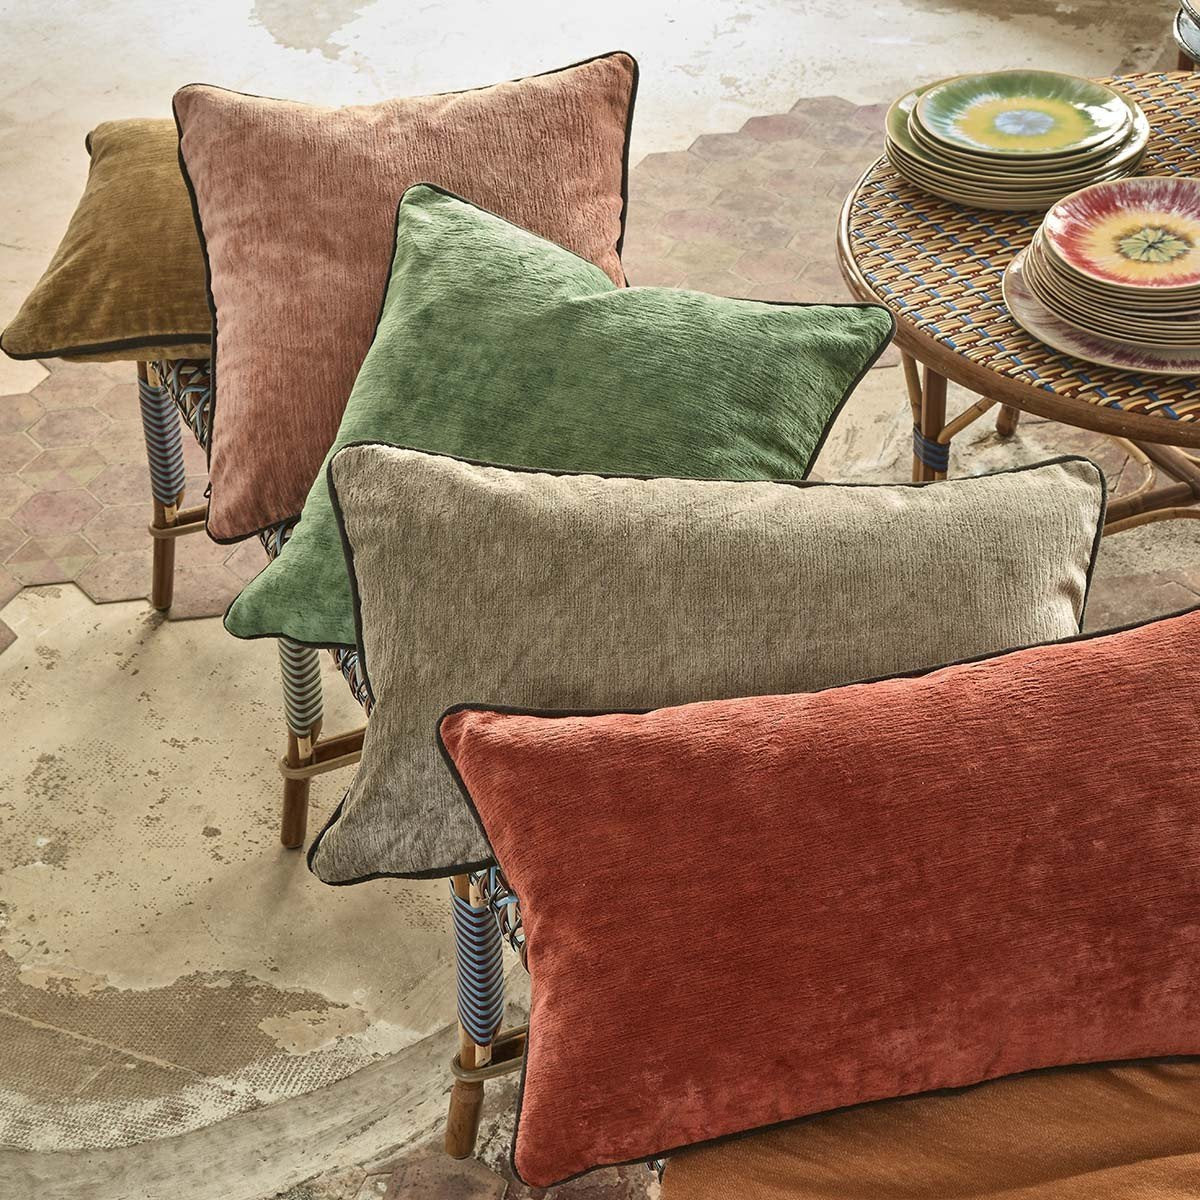 Boromee Decorative Pillows - Pioneer Linens